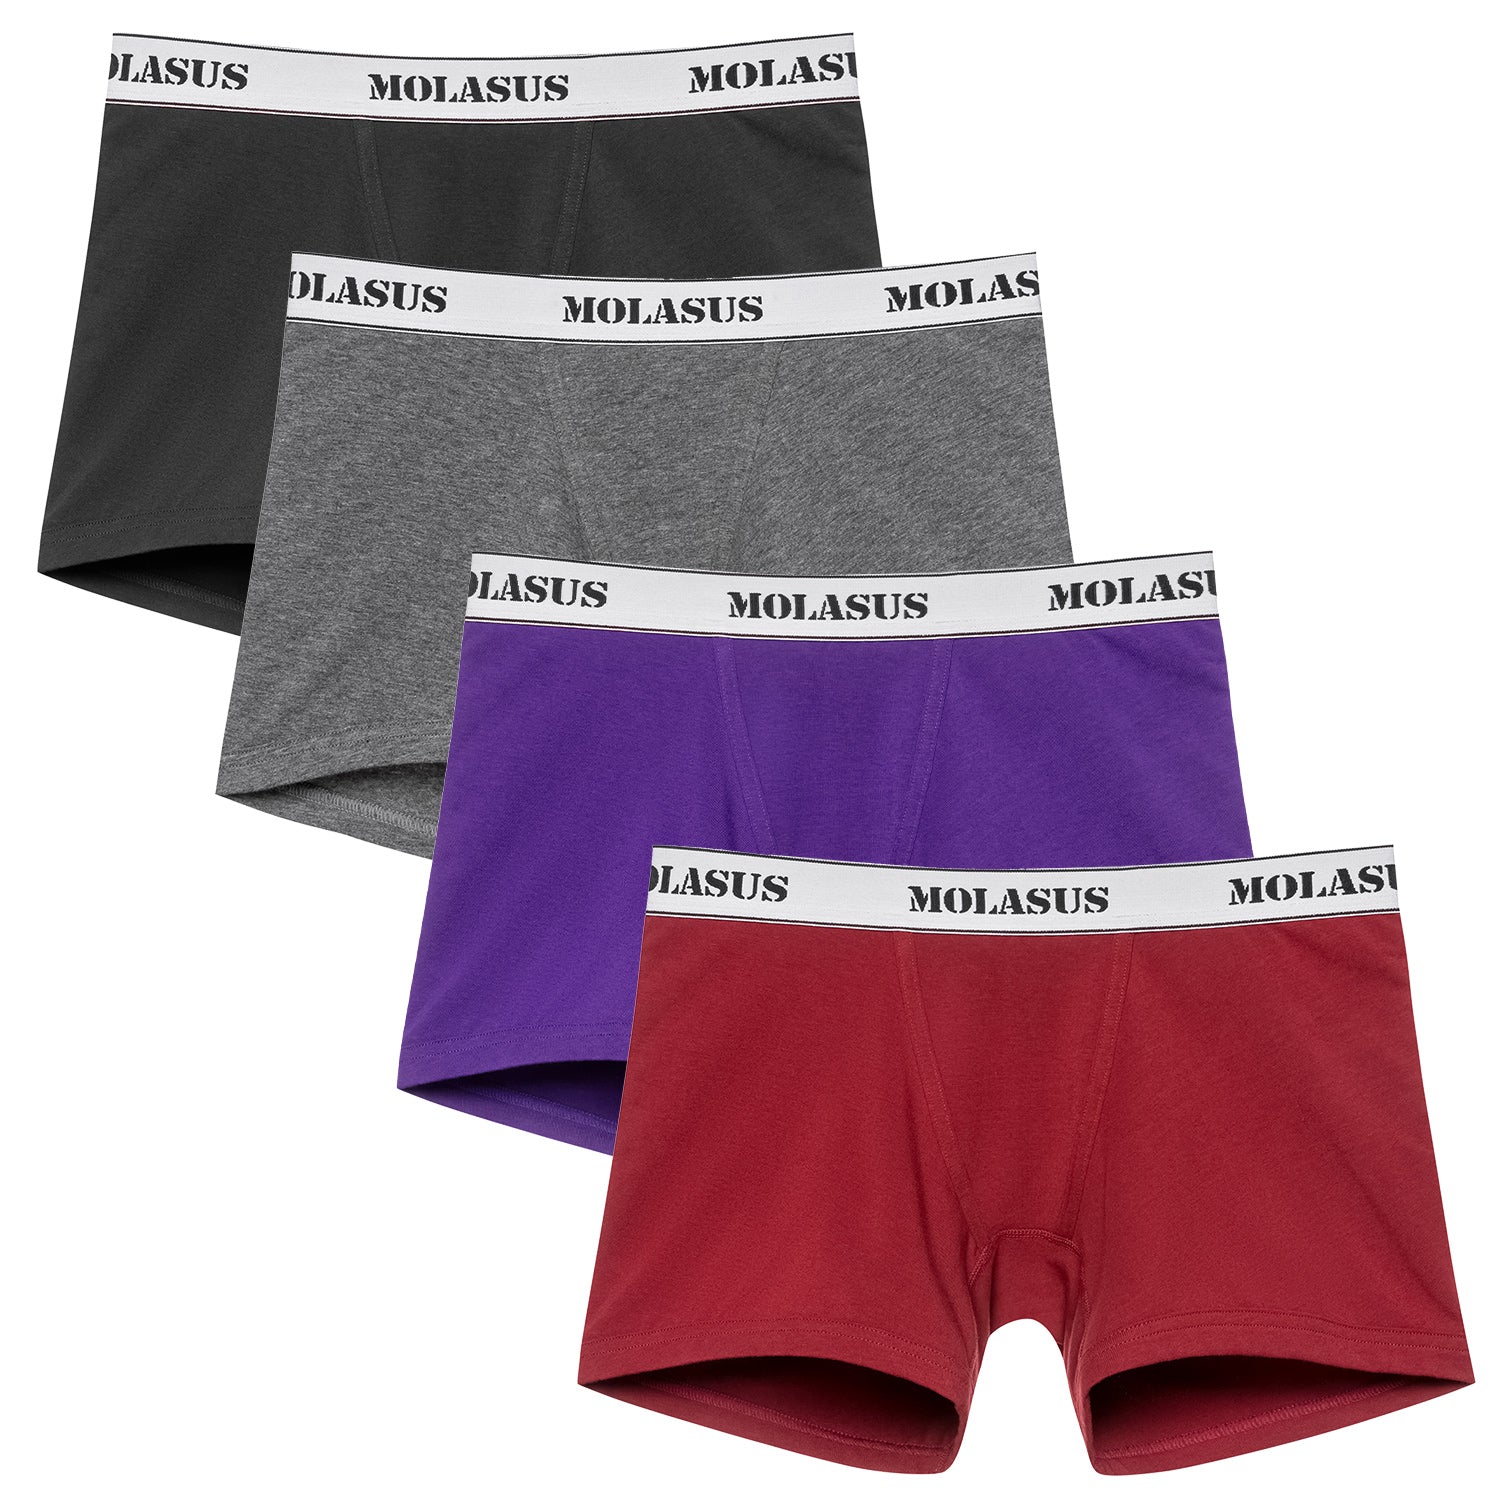 New Day Boys Cotton Brief Multicoloured  Boys Underwear Pack of 10 :  : Fashion